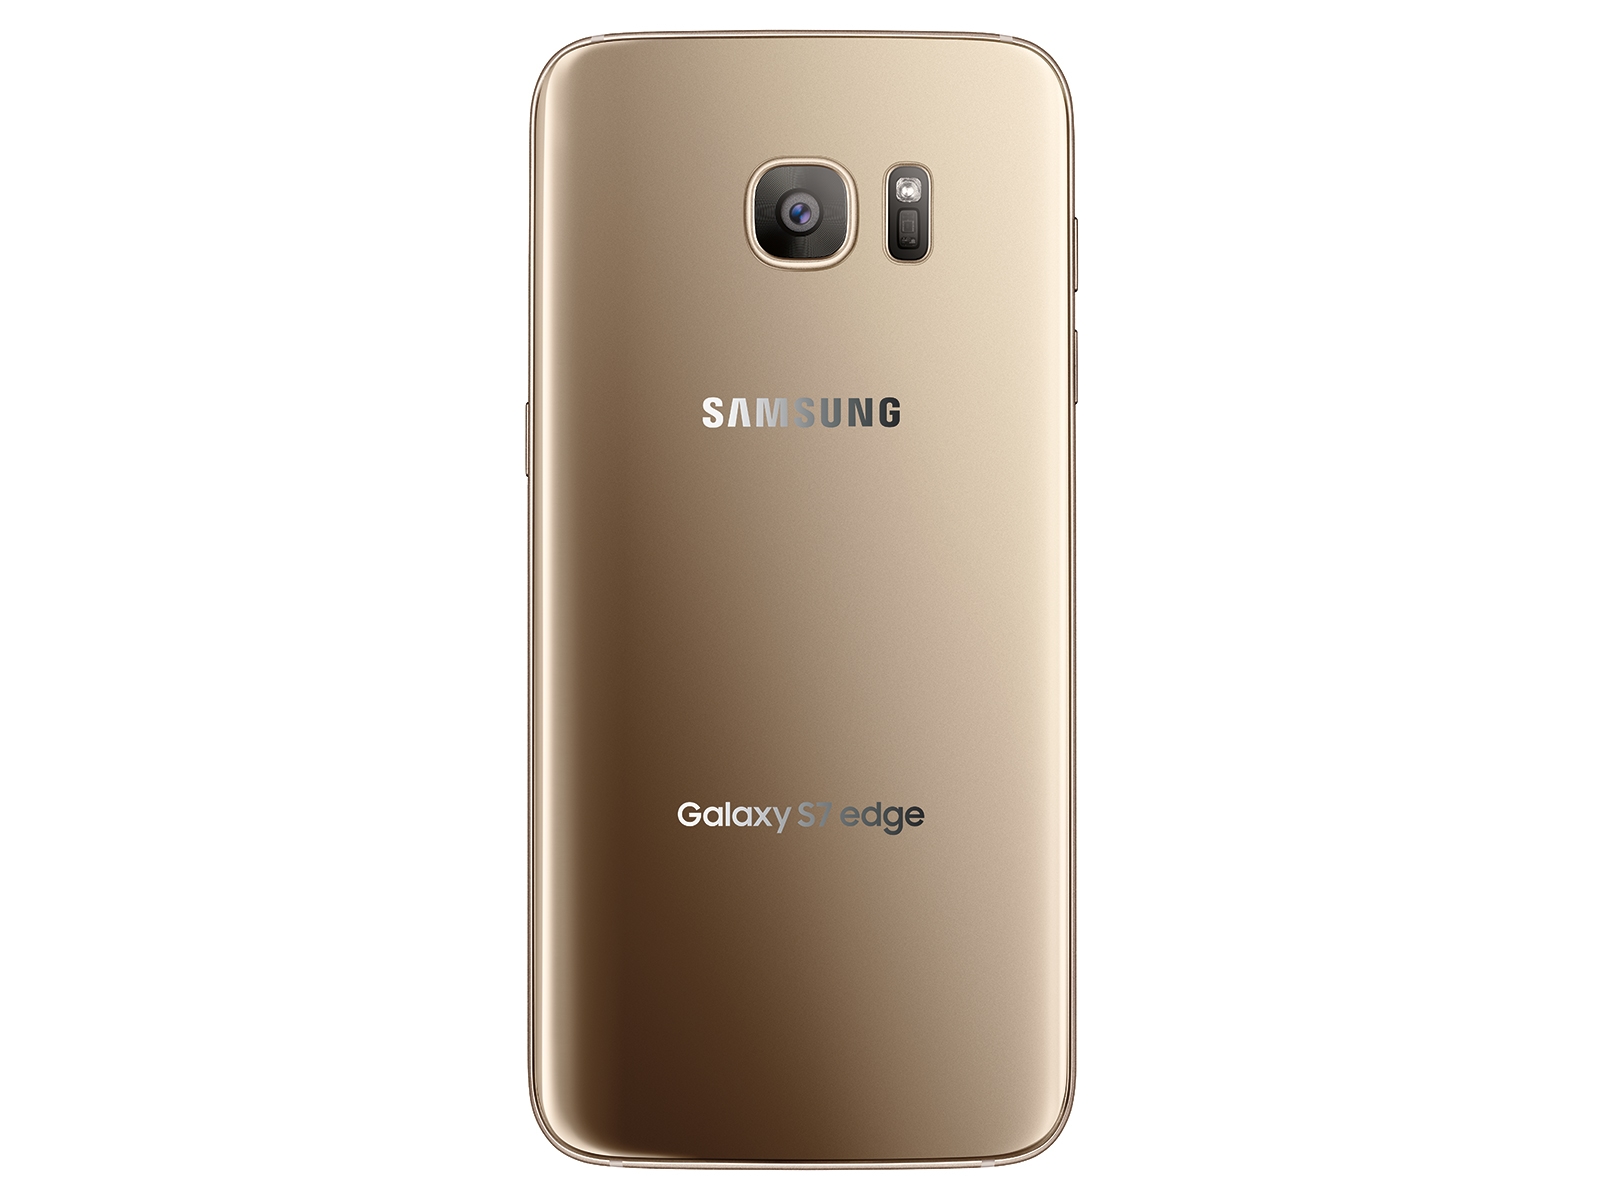 Galaxy S7 edge 32GB (Unlocked) Phones - SM-G935UZDAXAA | Samsung US